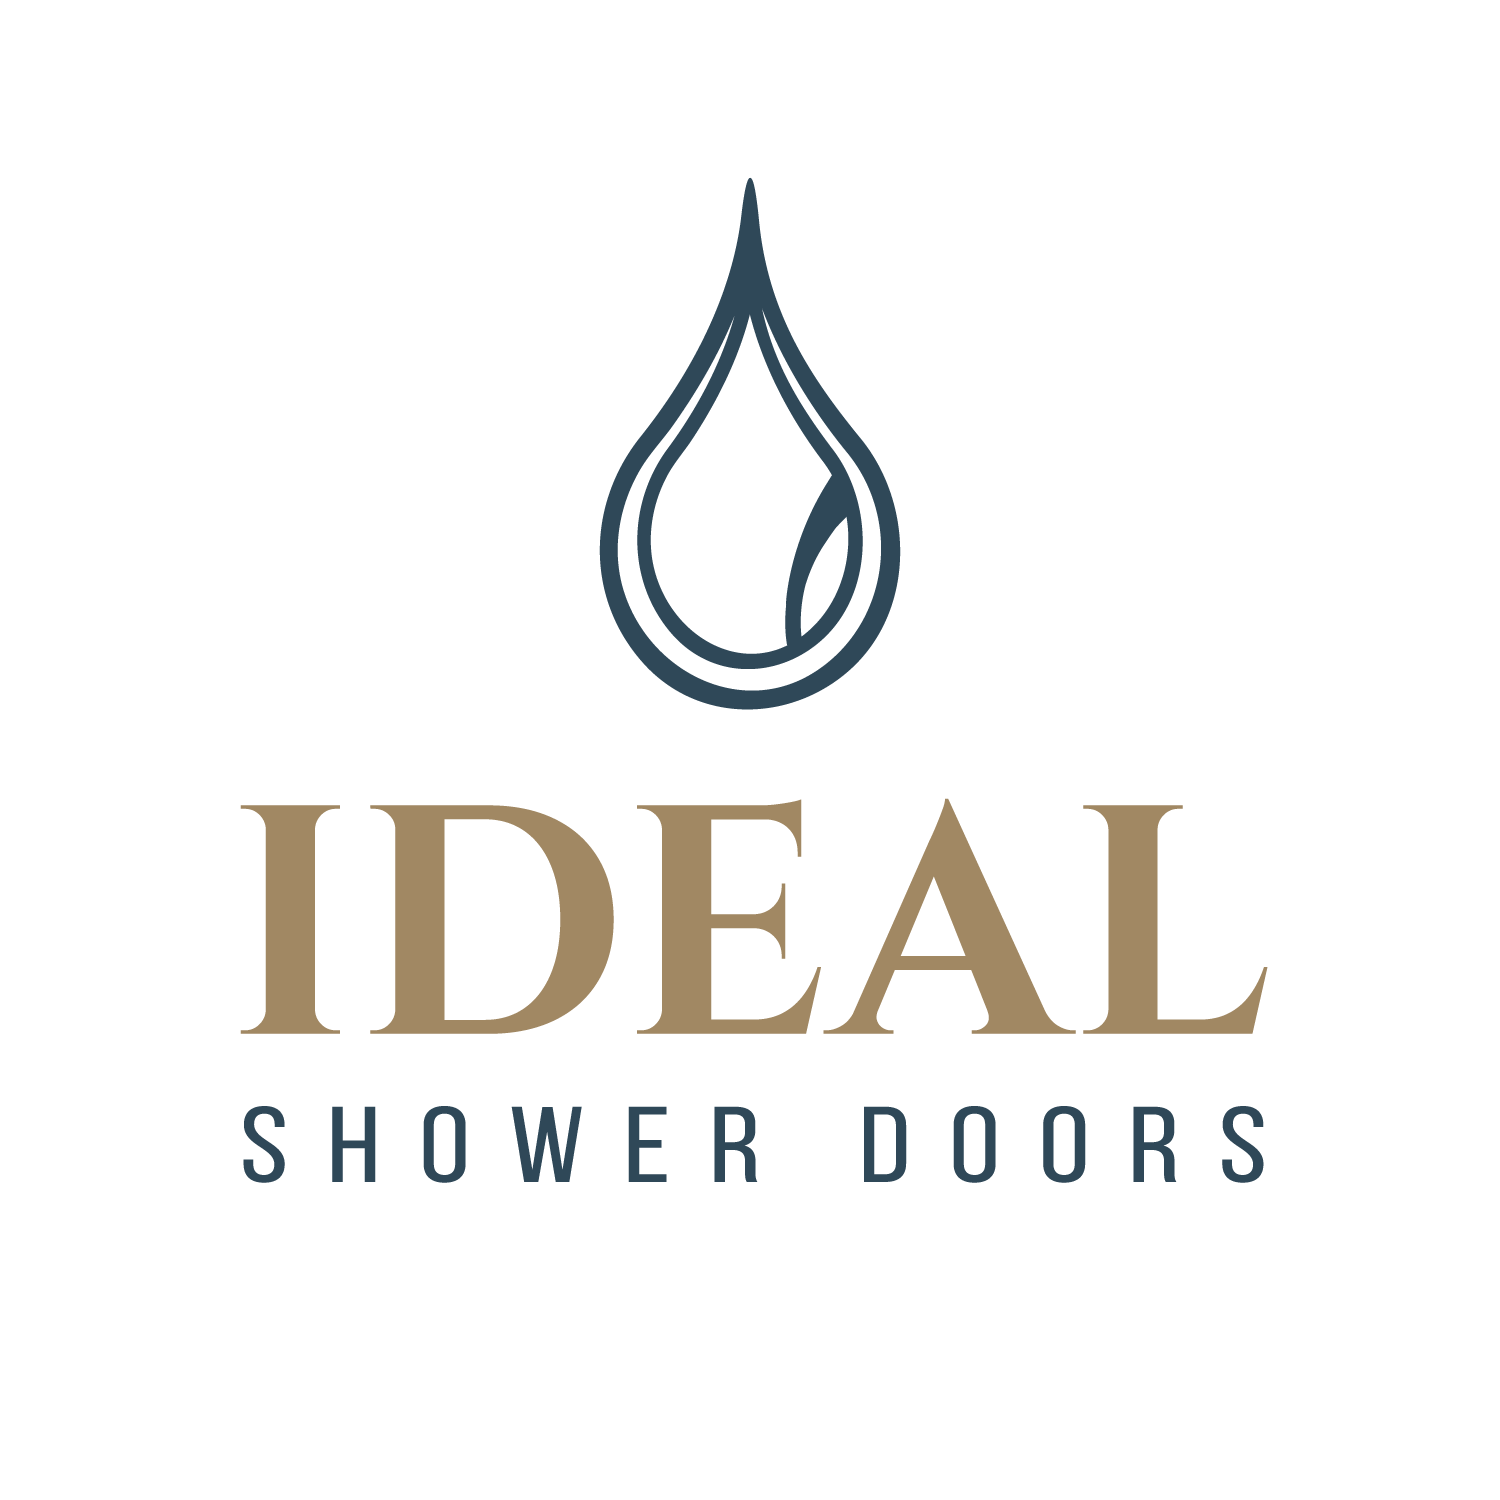 IDEAL Shower Doors Makes a Splash in Wellesley with New Office, Growing Fleet, and Installer Network